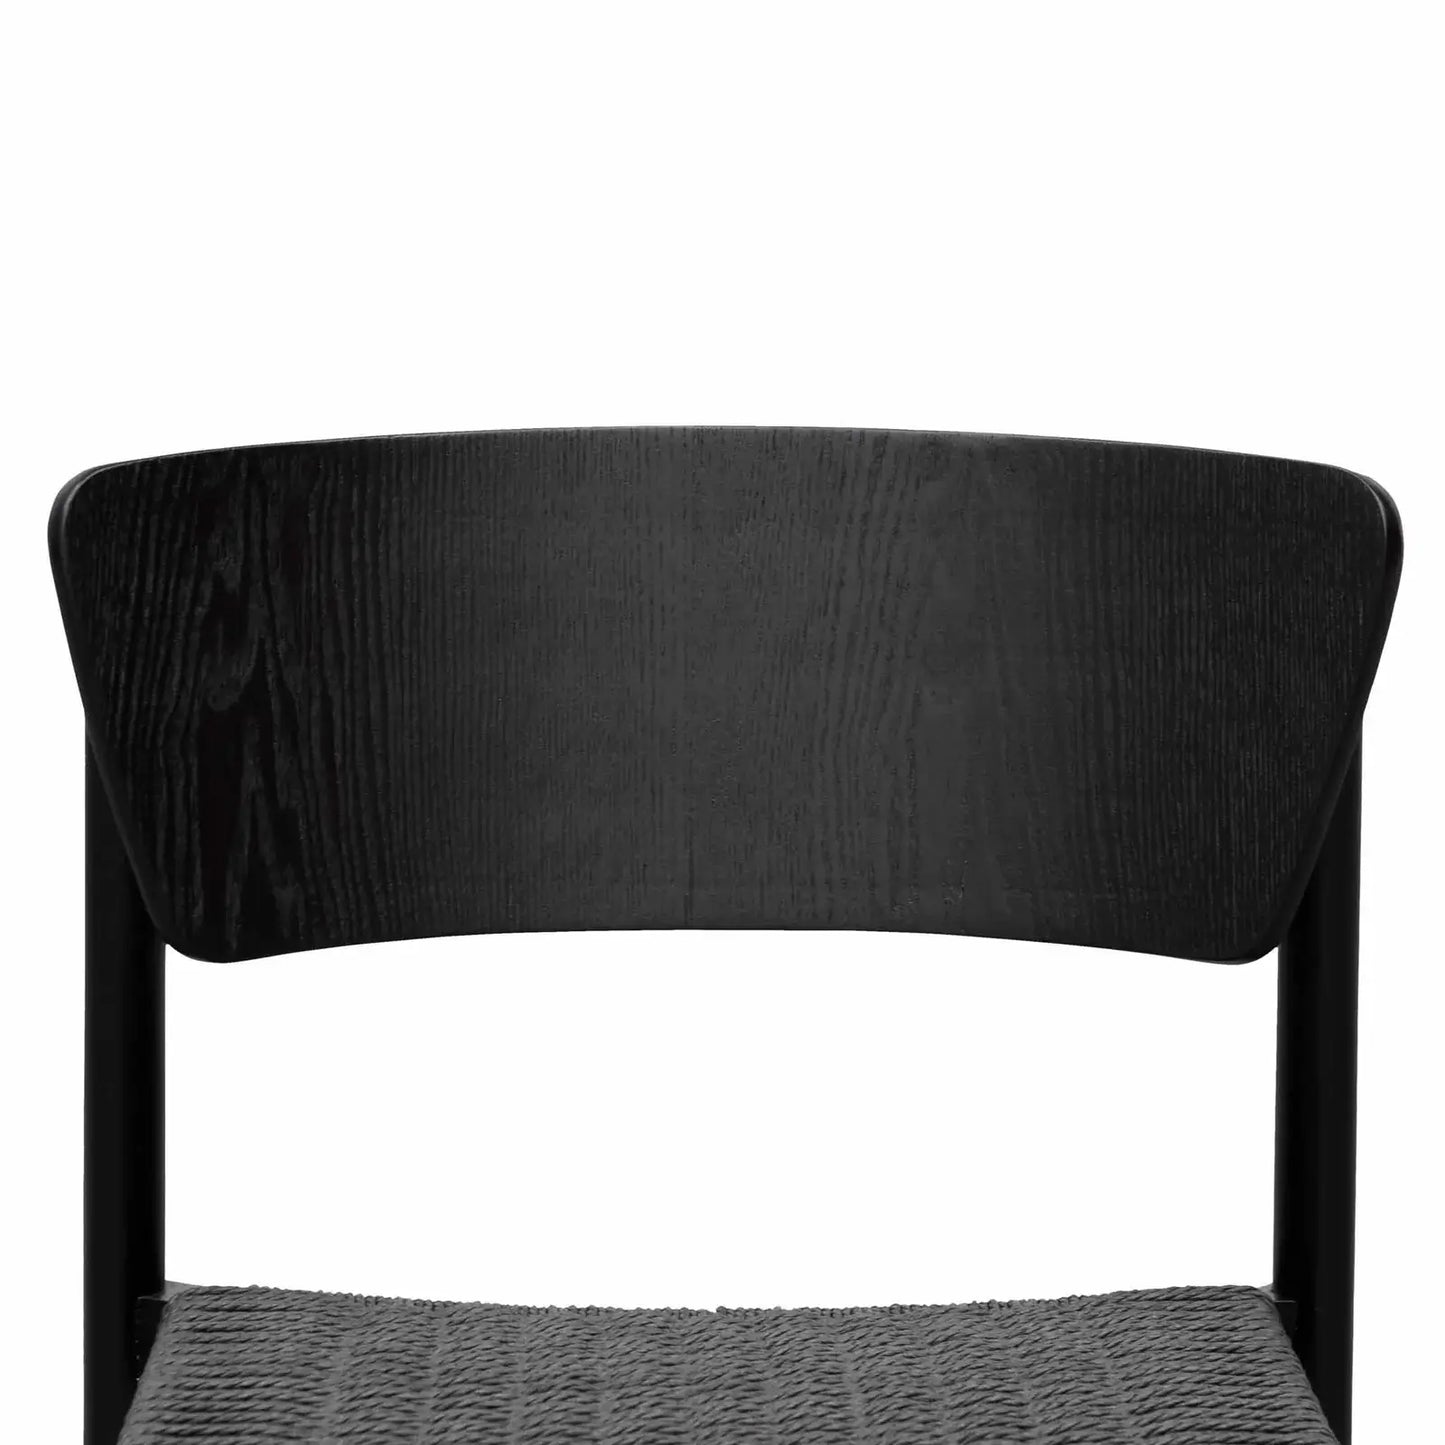 Bayville | Natural Black Coastal Wooden Dining Chairs | Set Of 2 | Black